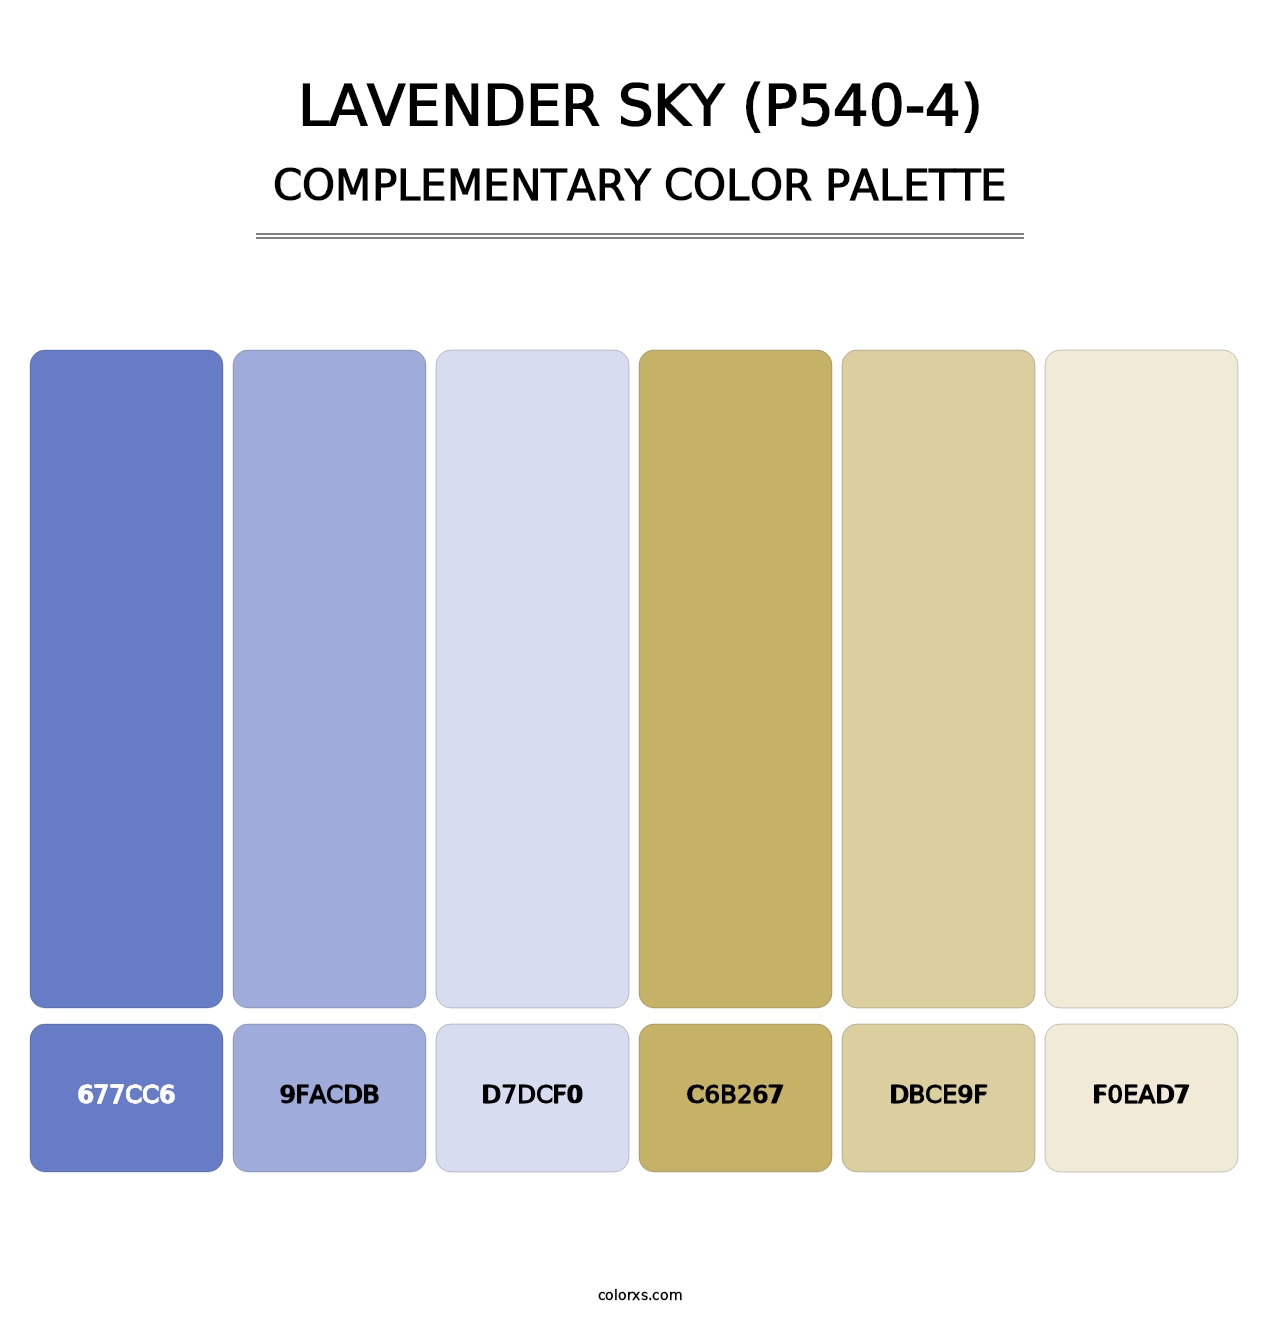 Lavender Sky (P540-4) - Complementary Color Palette